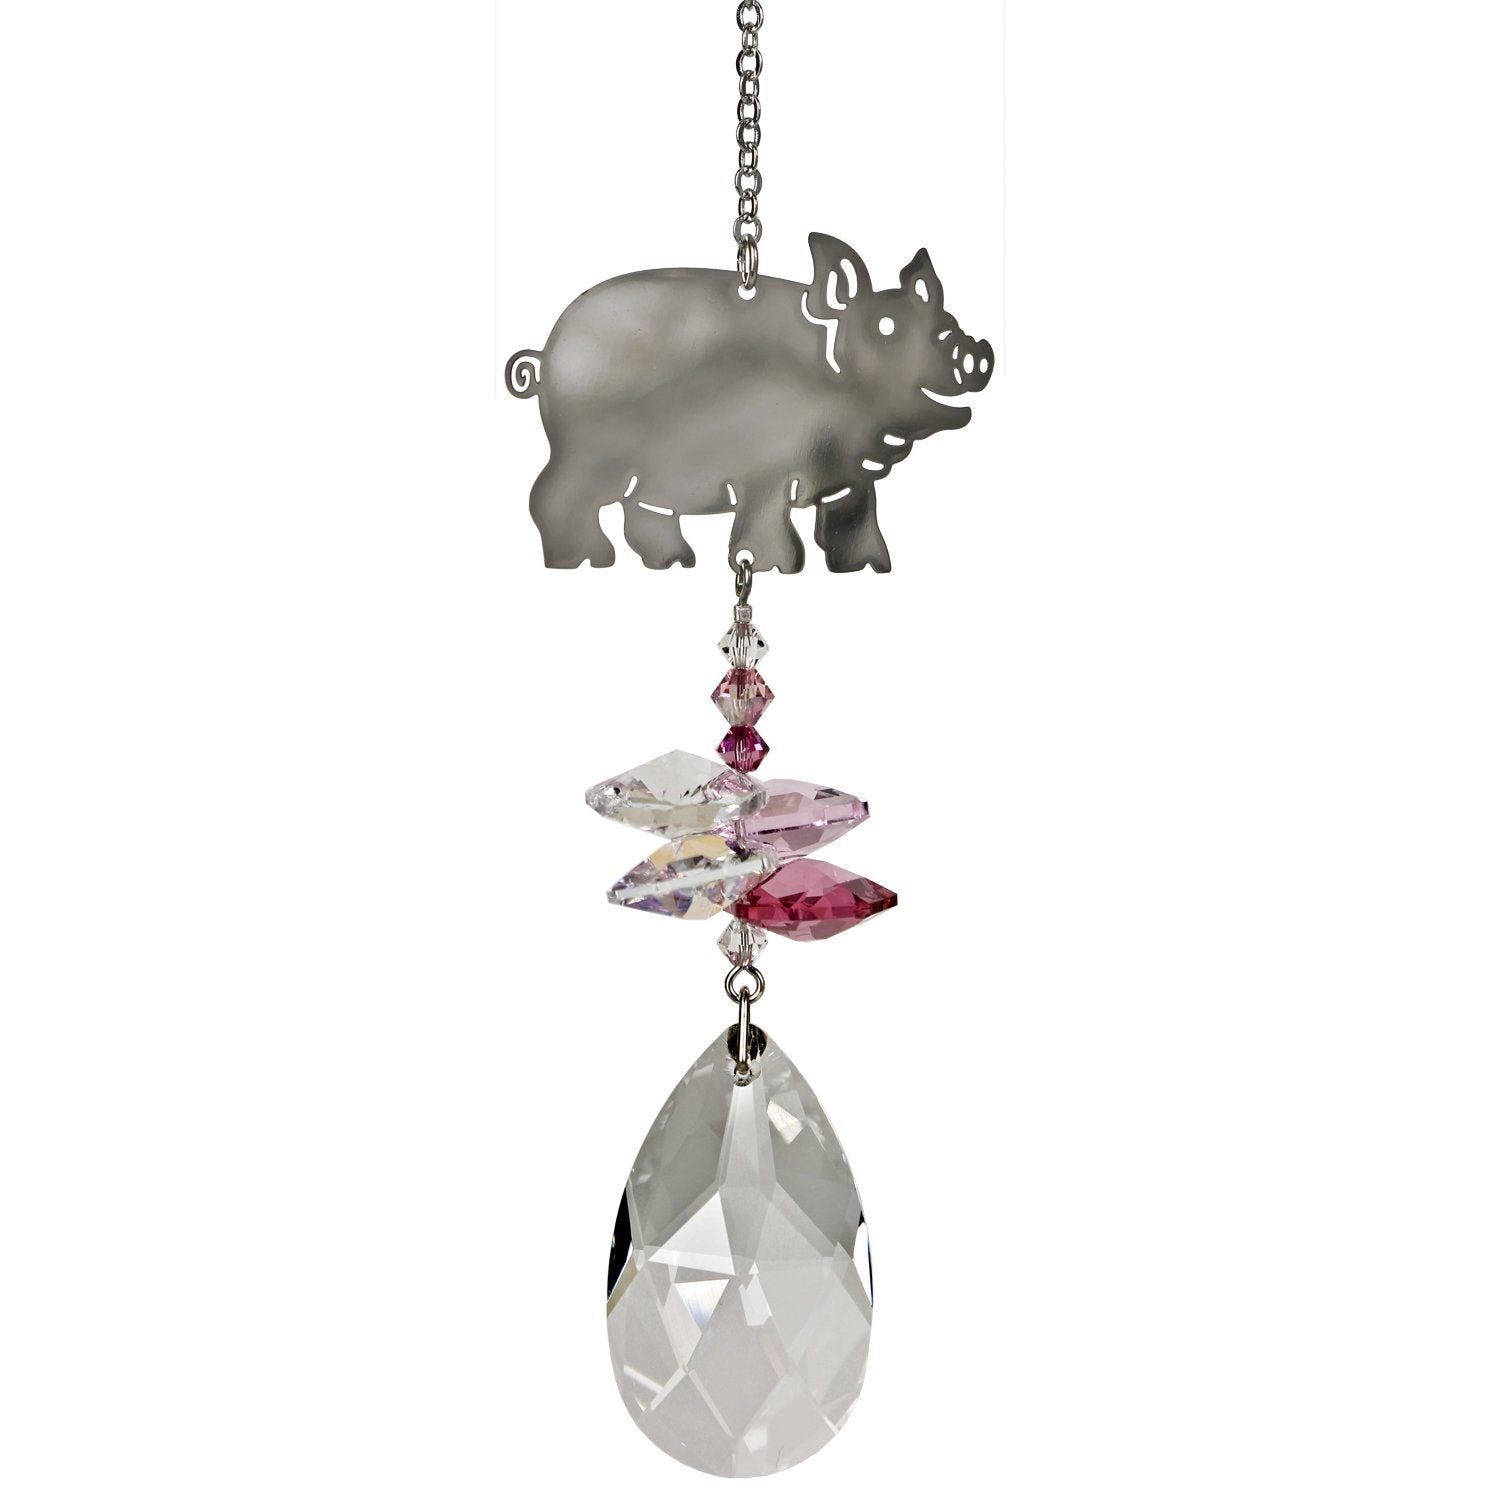 Crystal Fantasy Suncatcher - Pig alternate product image